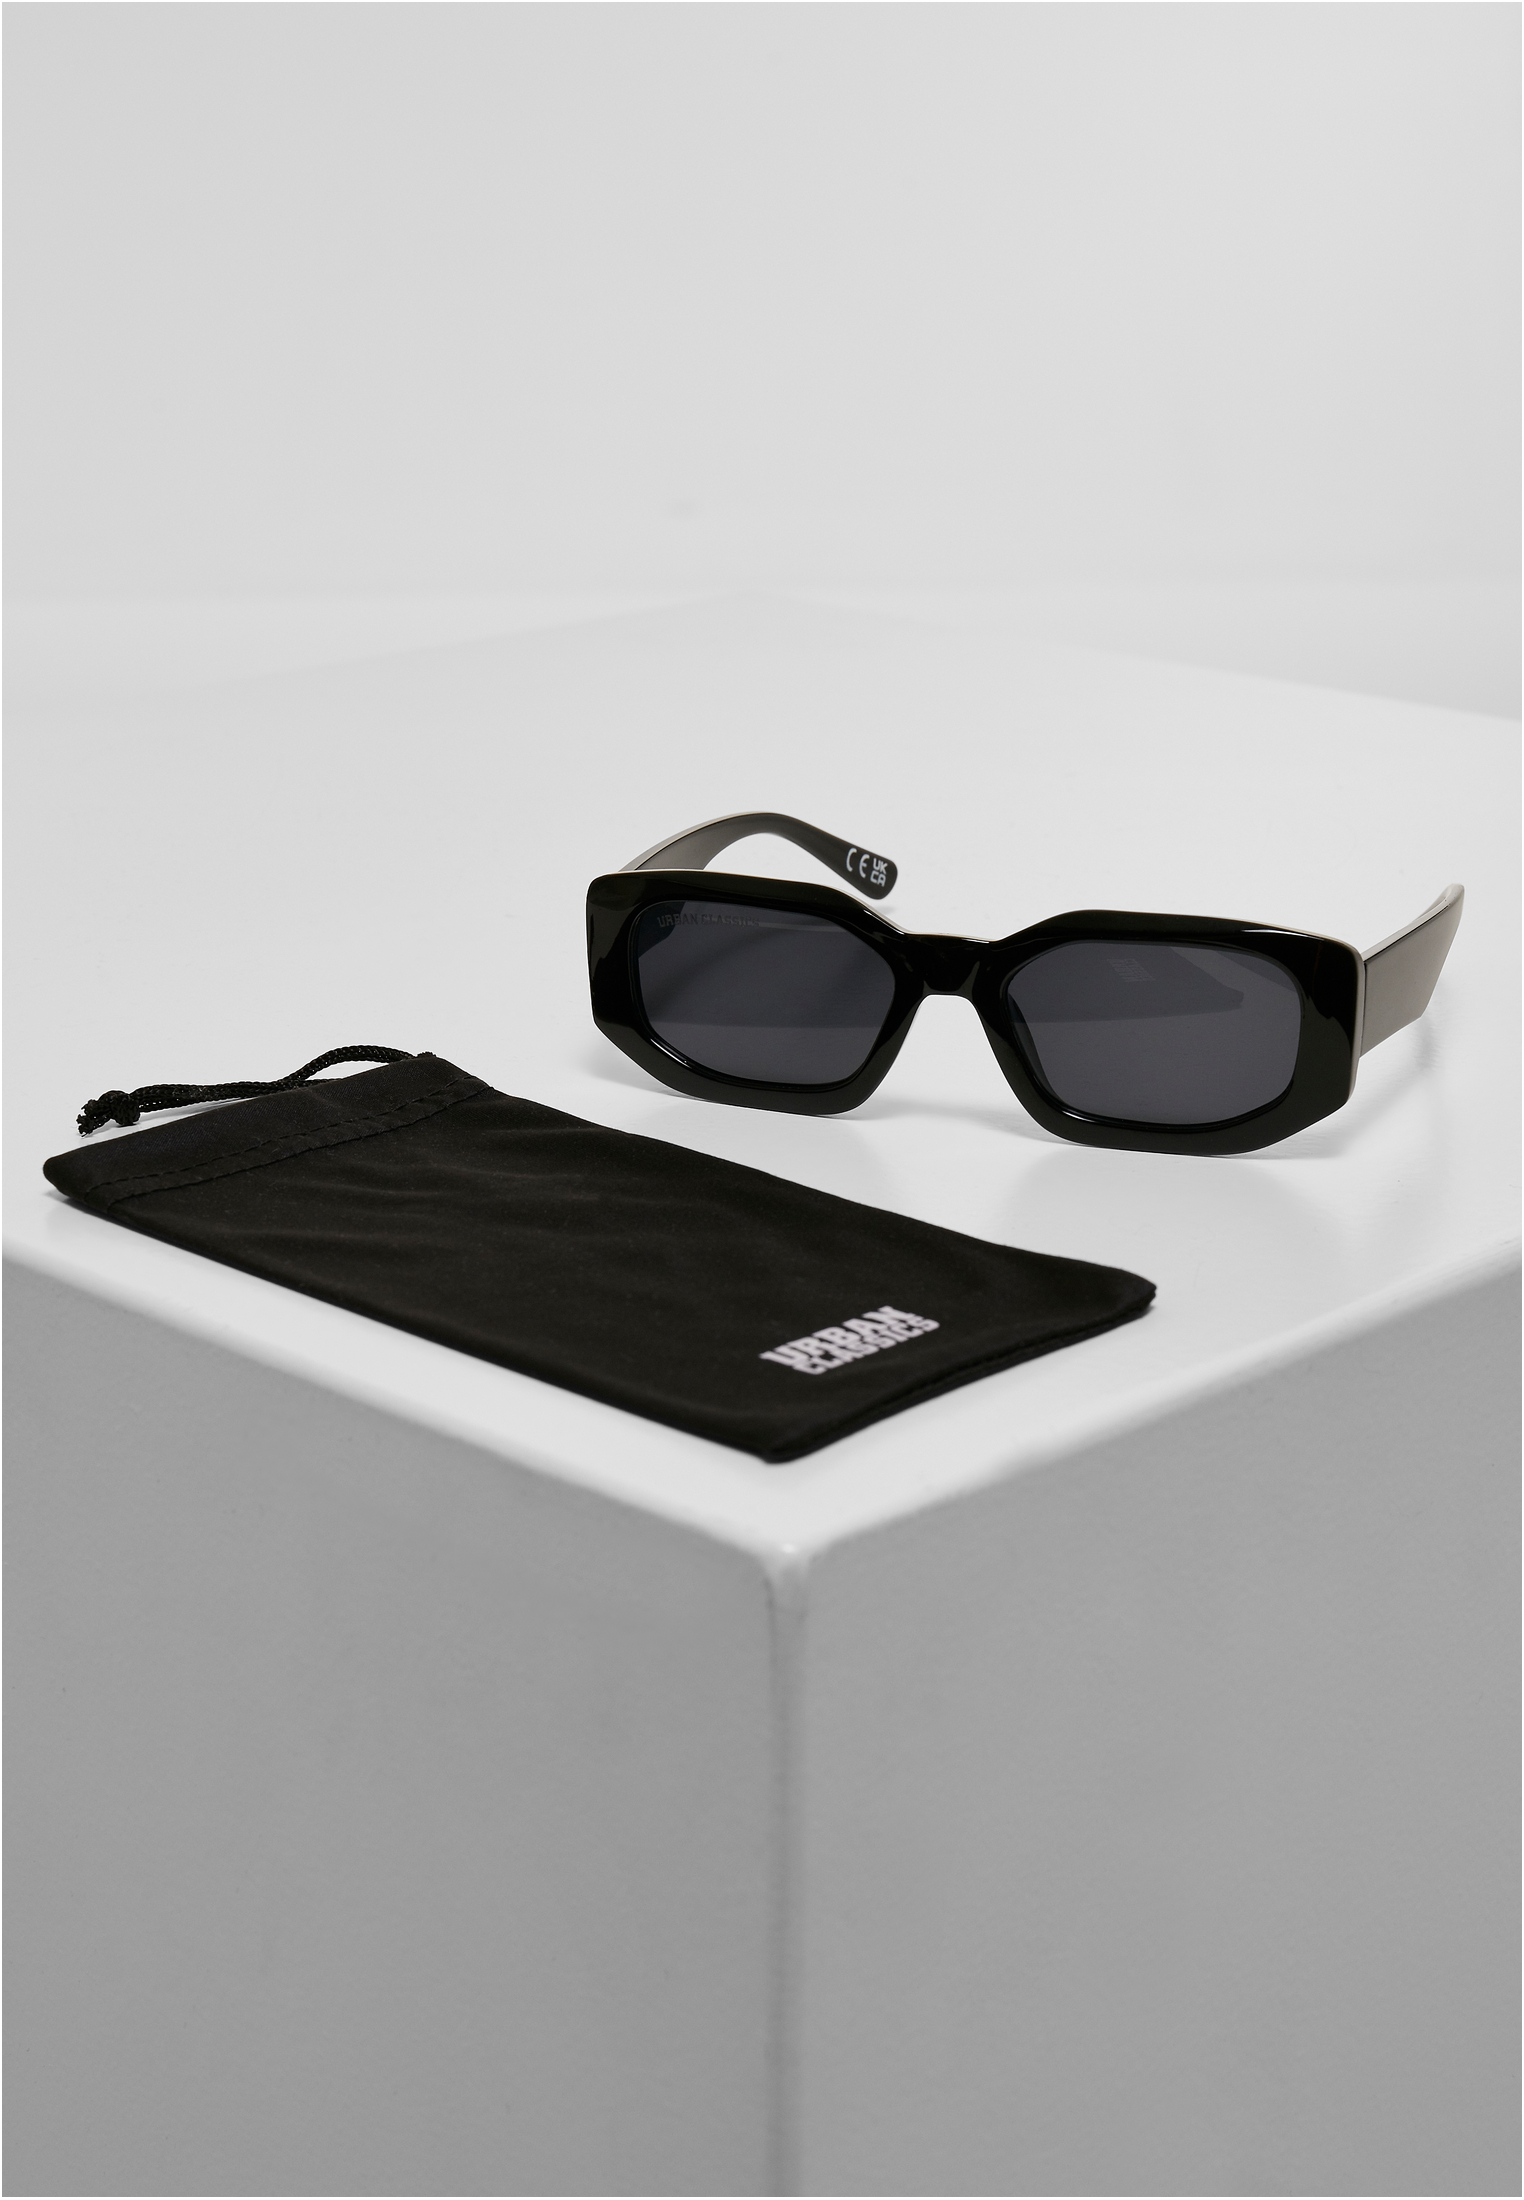 Sunglasses Santa Rosa-TB5202 | Sonnenbrillen